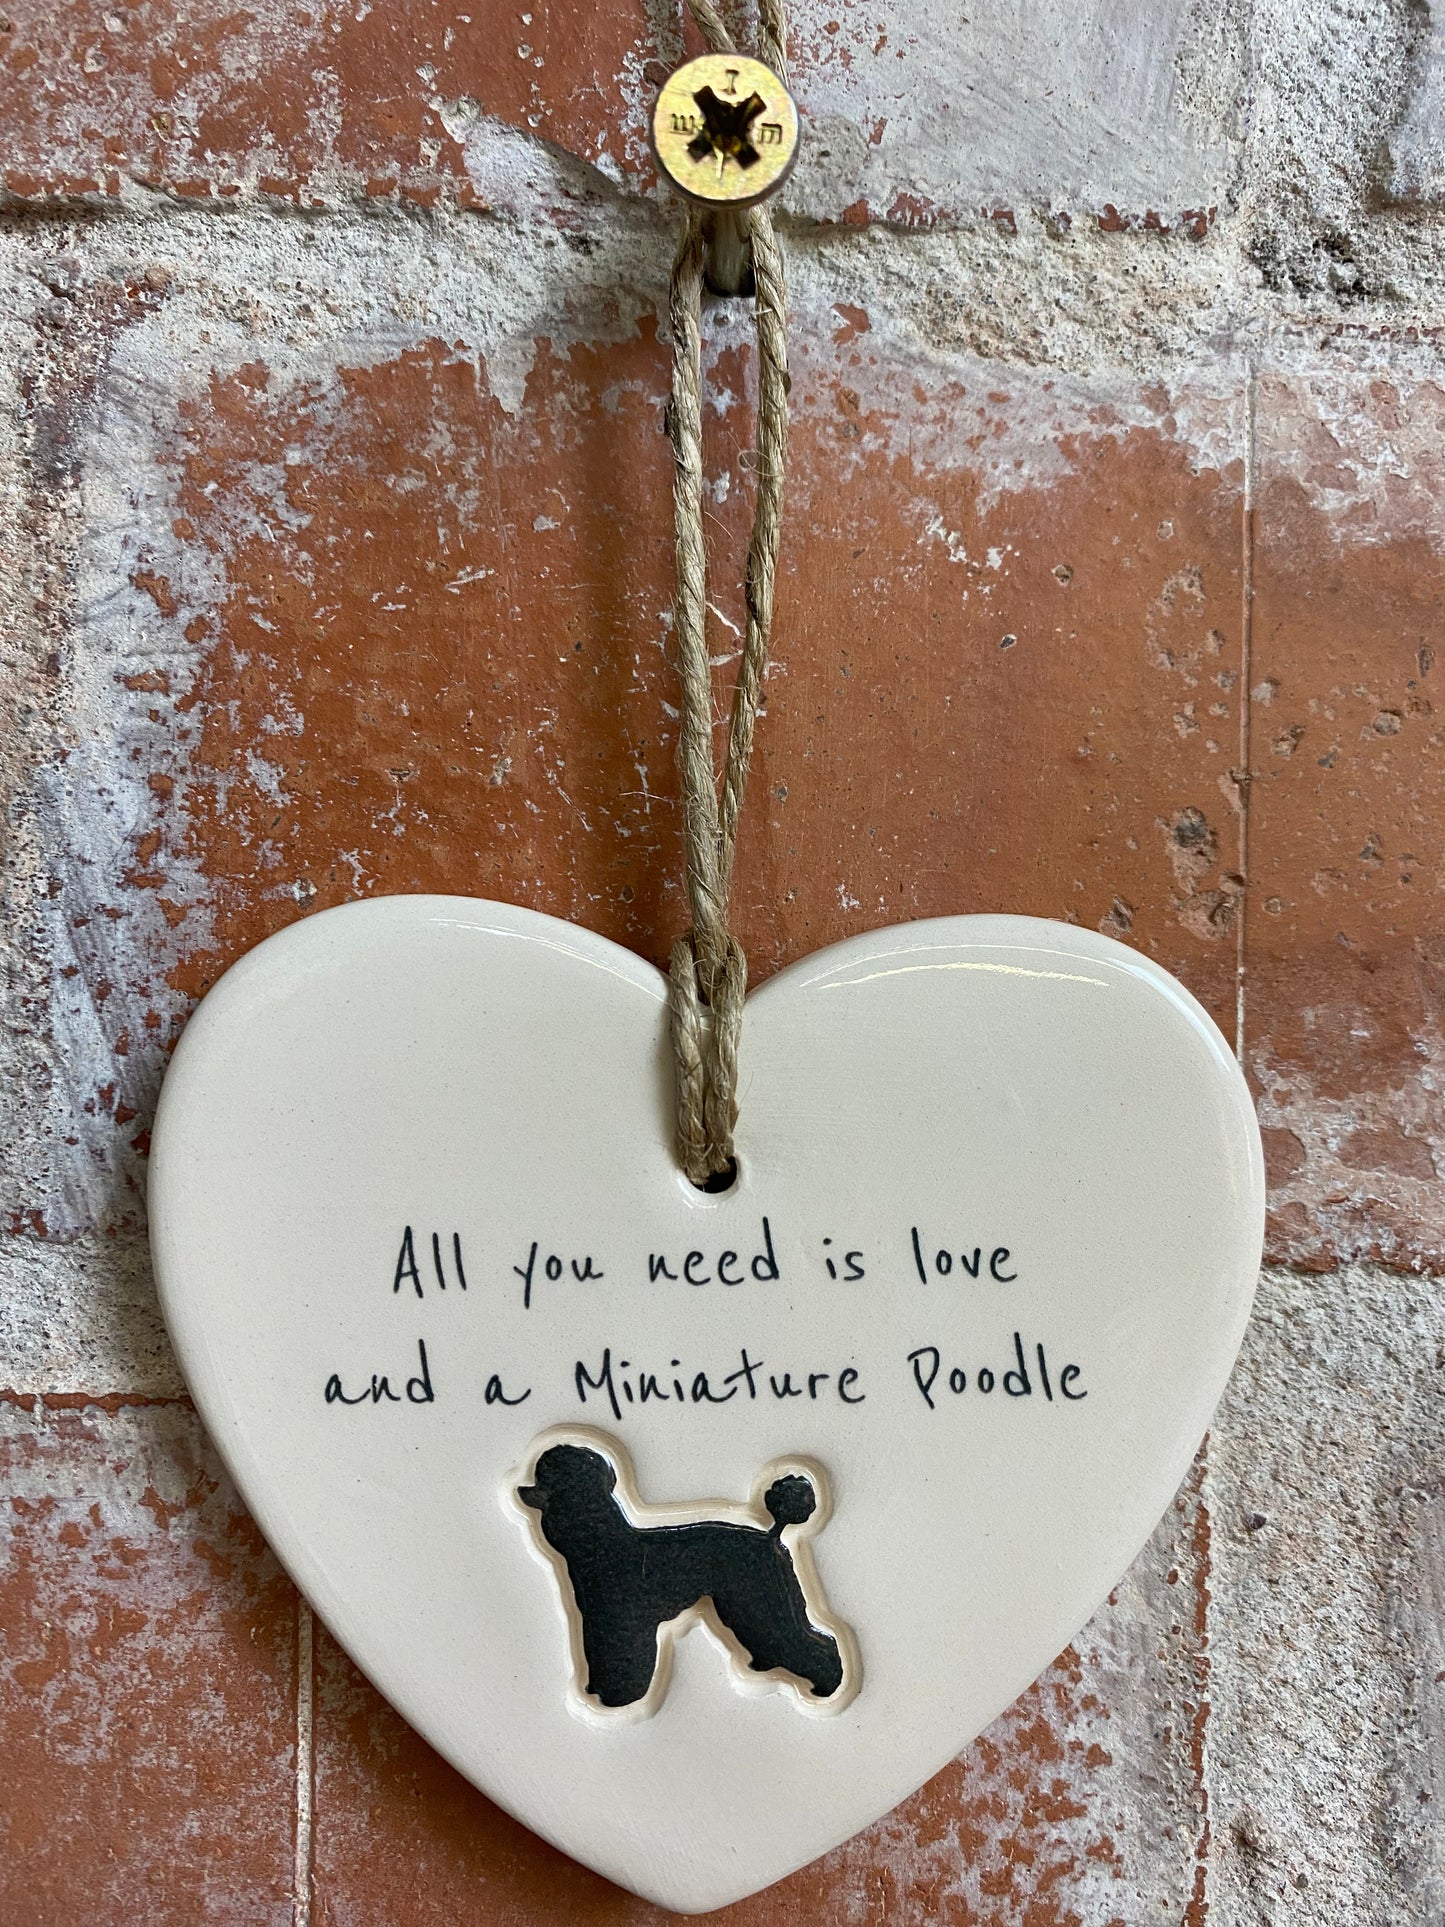 Miniature Poodle ceramic heart